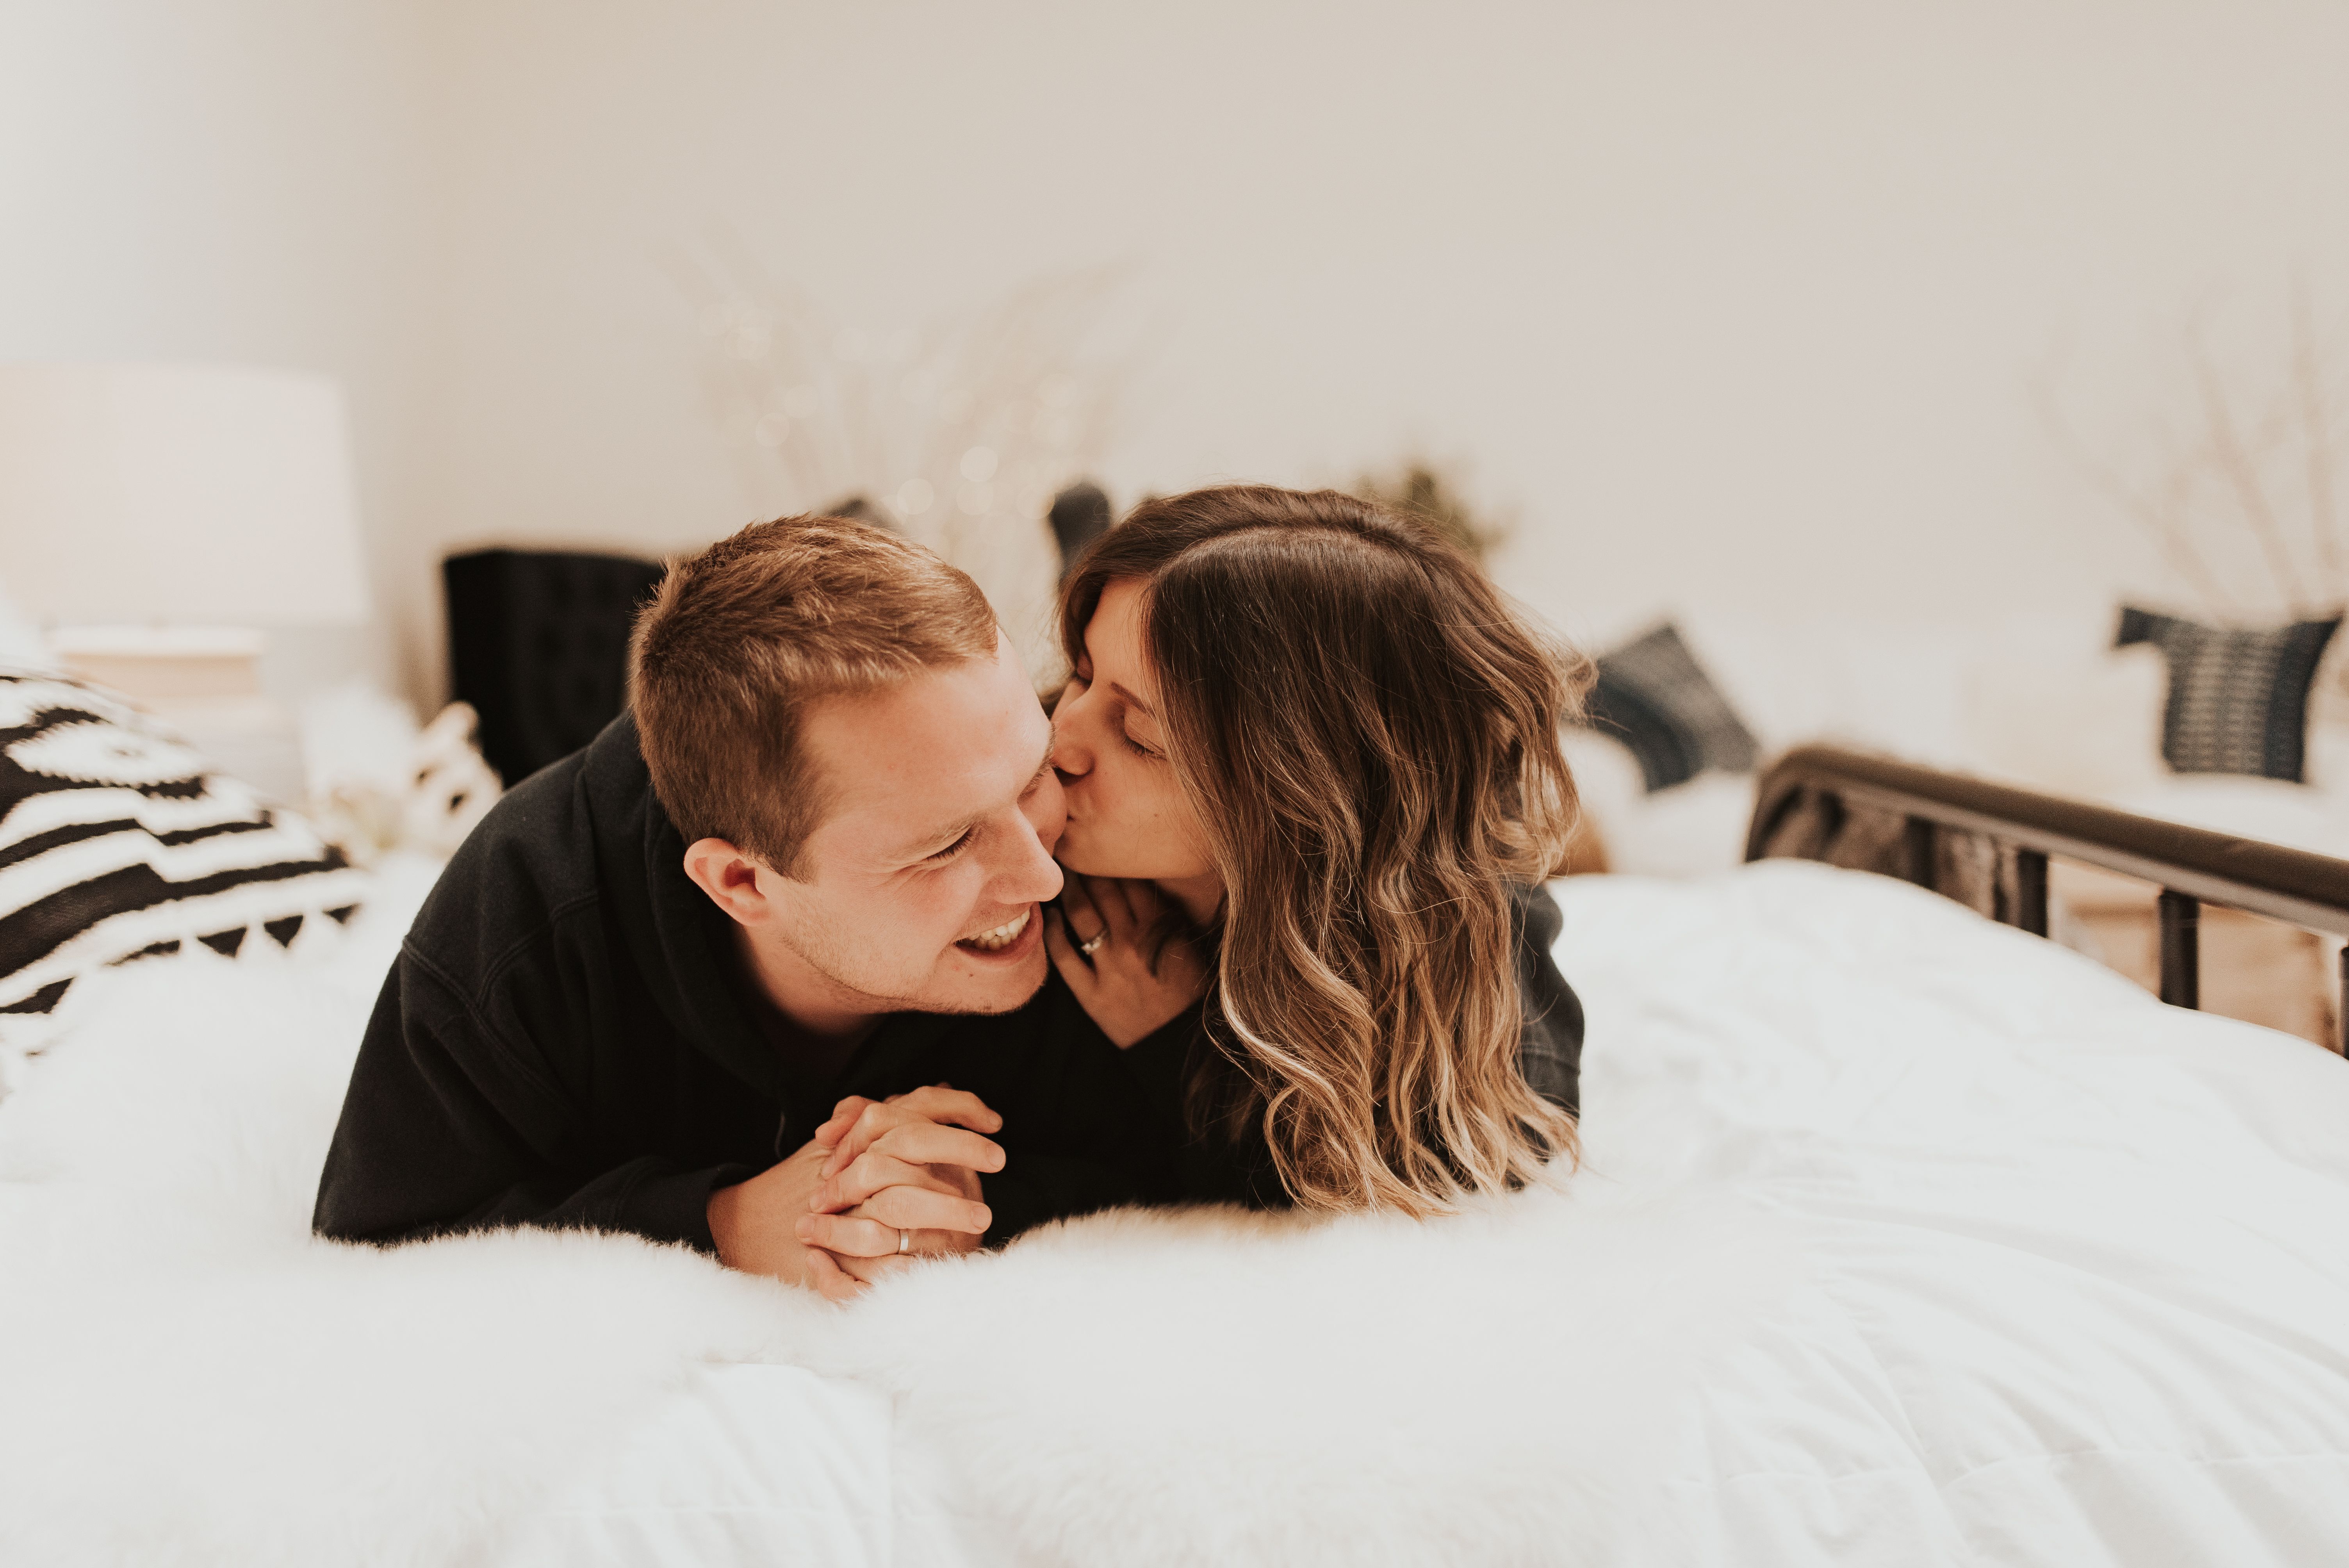 Best of Couple bedroom photoshoot ideas